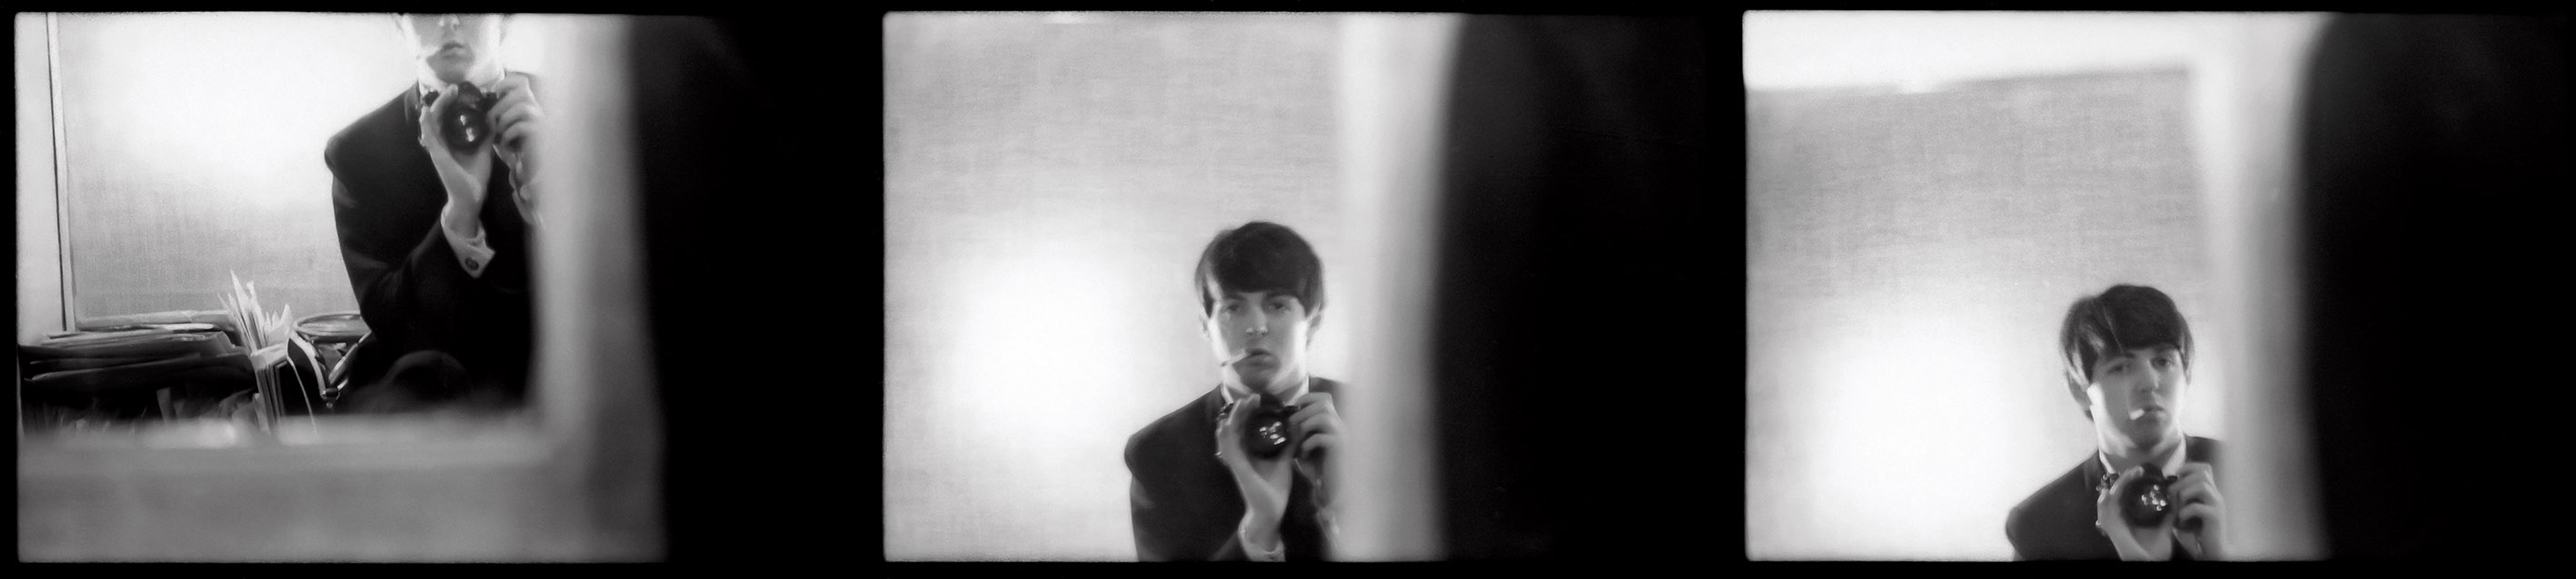 Triptych self-portrait photograph of Paul McCartney 